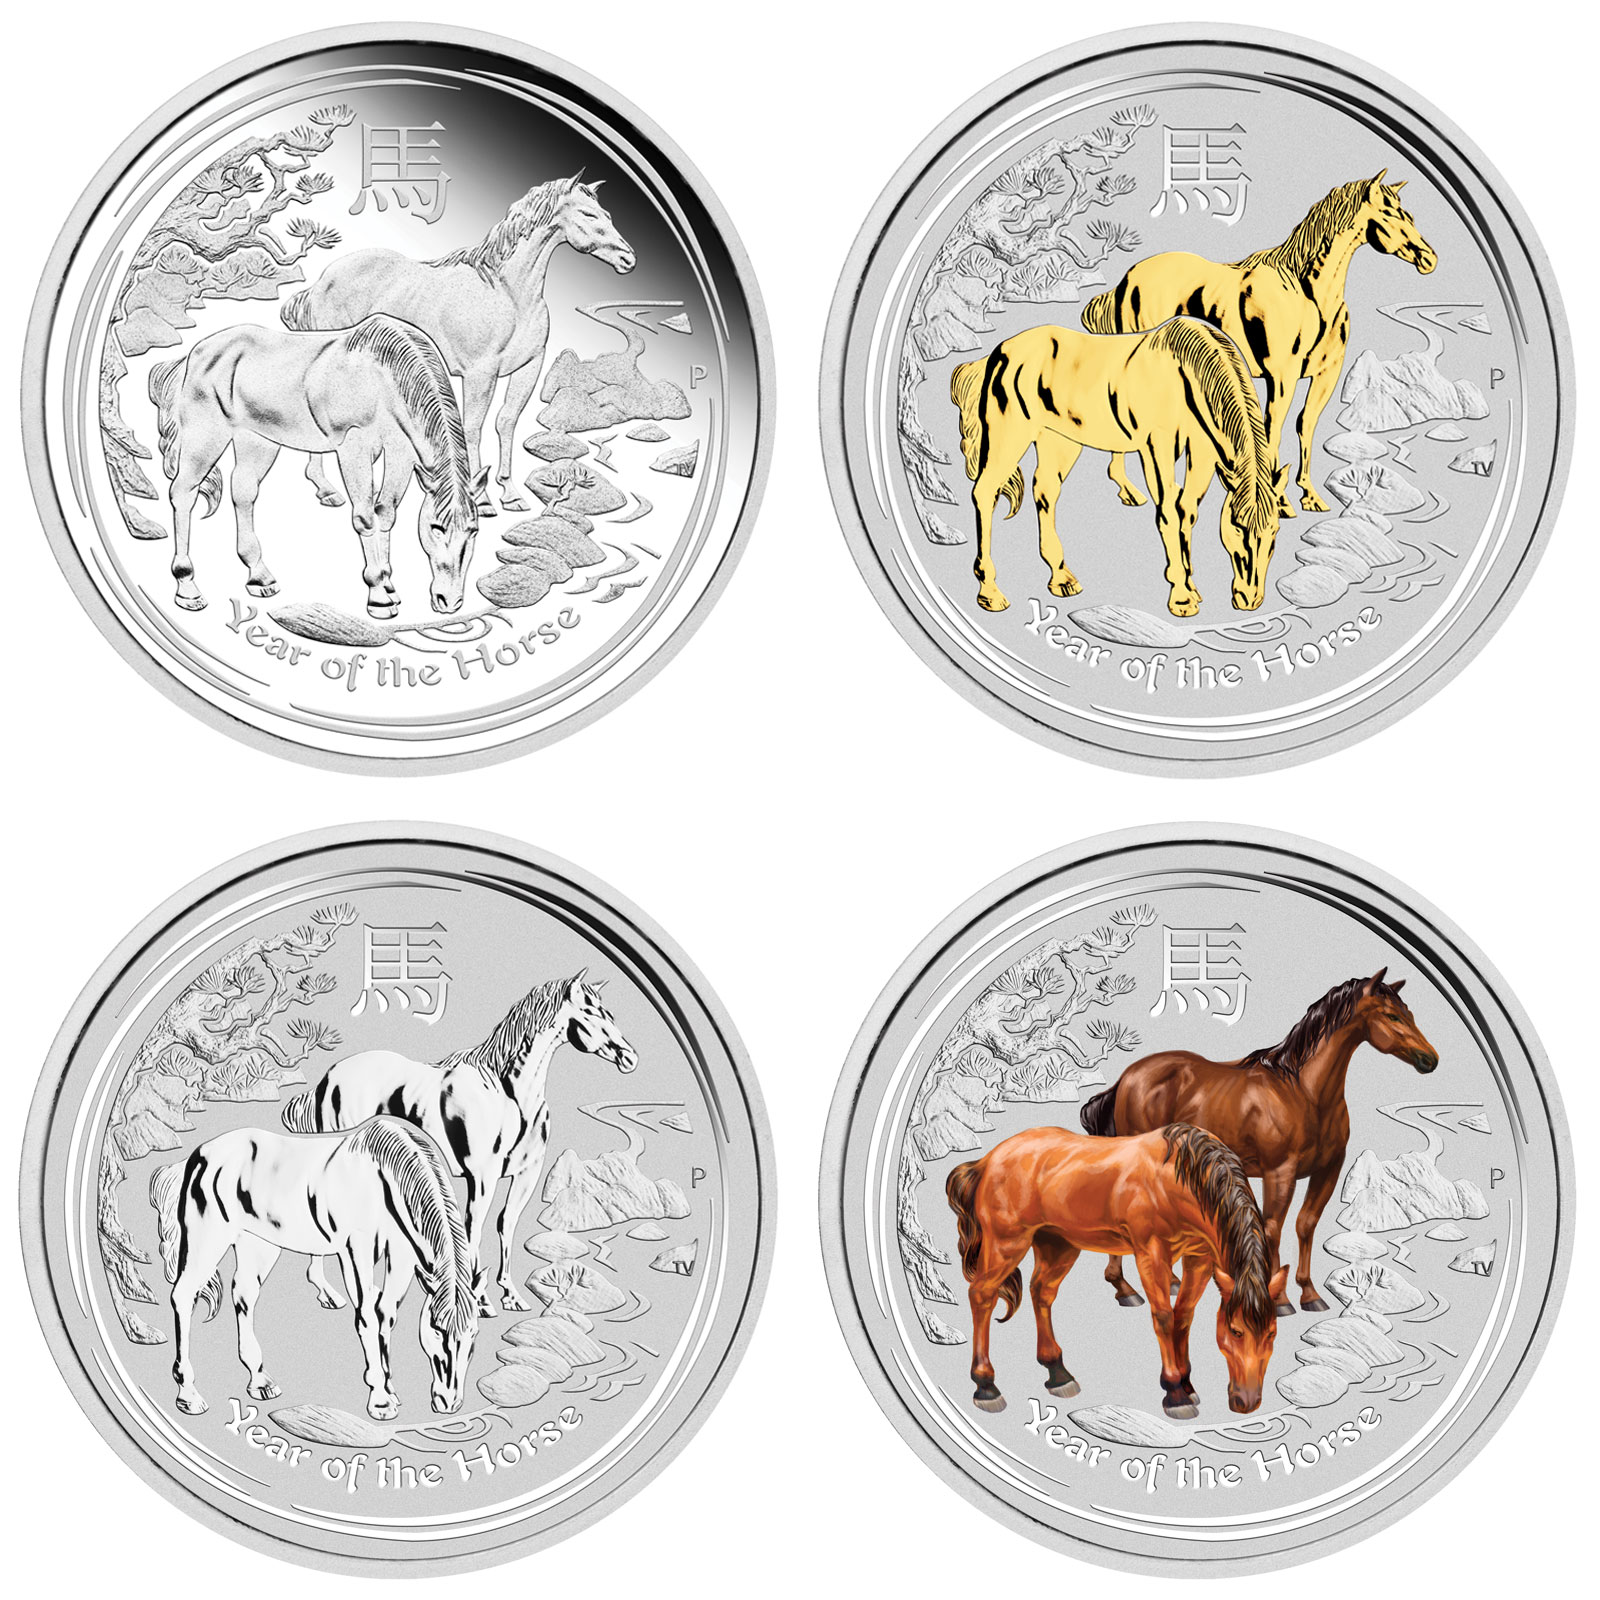 Details about   Perth Mint Australia $ 0.5 LS2 Horse 2014 1/2 oz .999 Proof Silver Coin 